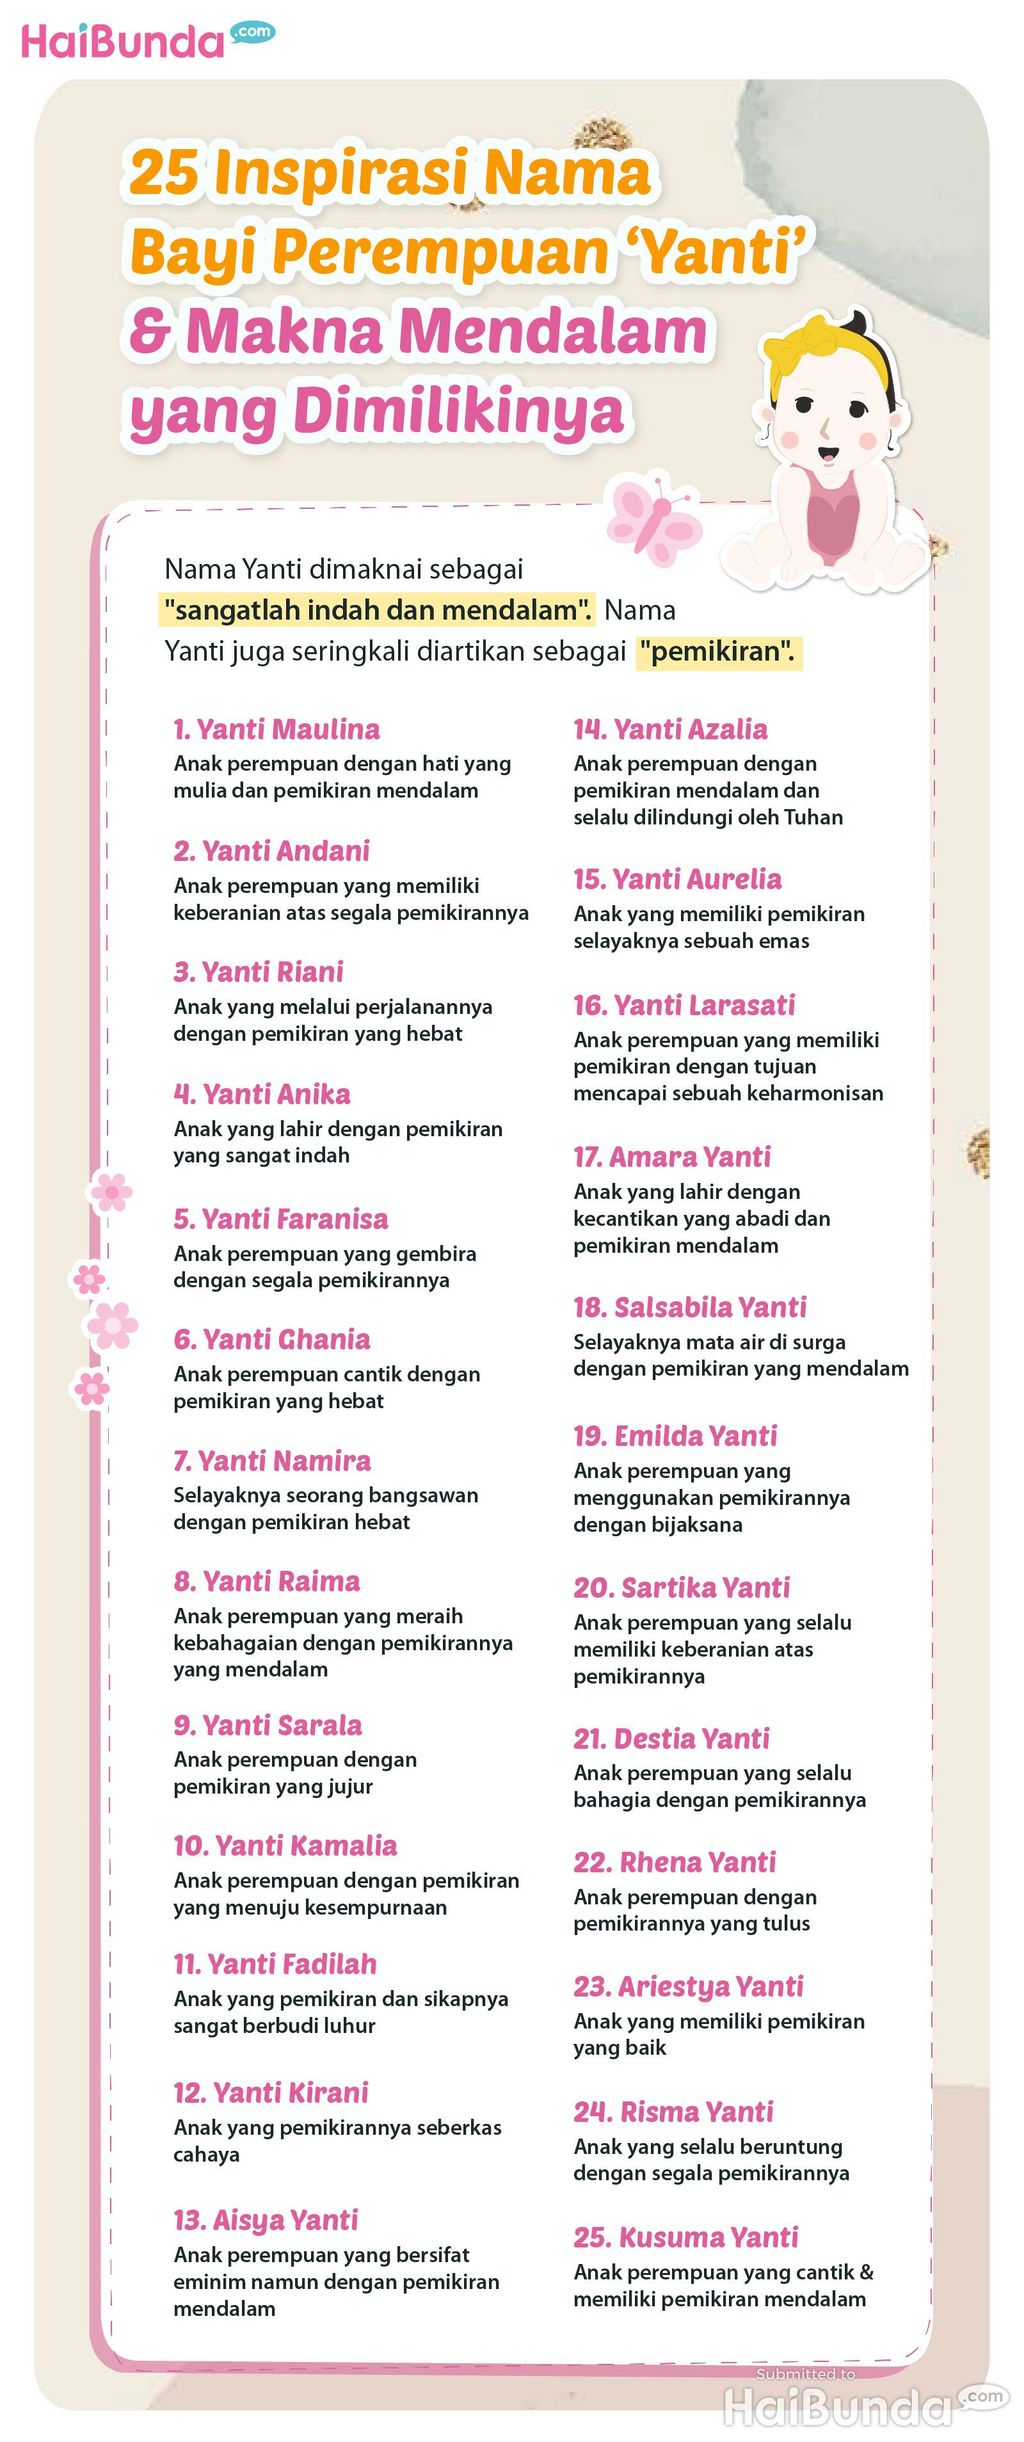 Infografis 25 Inspirasi Nama Bayi Perempuan ‘Yanti' & Makna Mendalam nan Dimilikinya